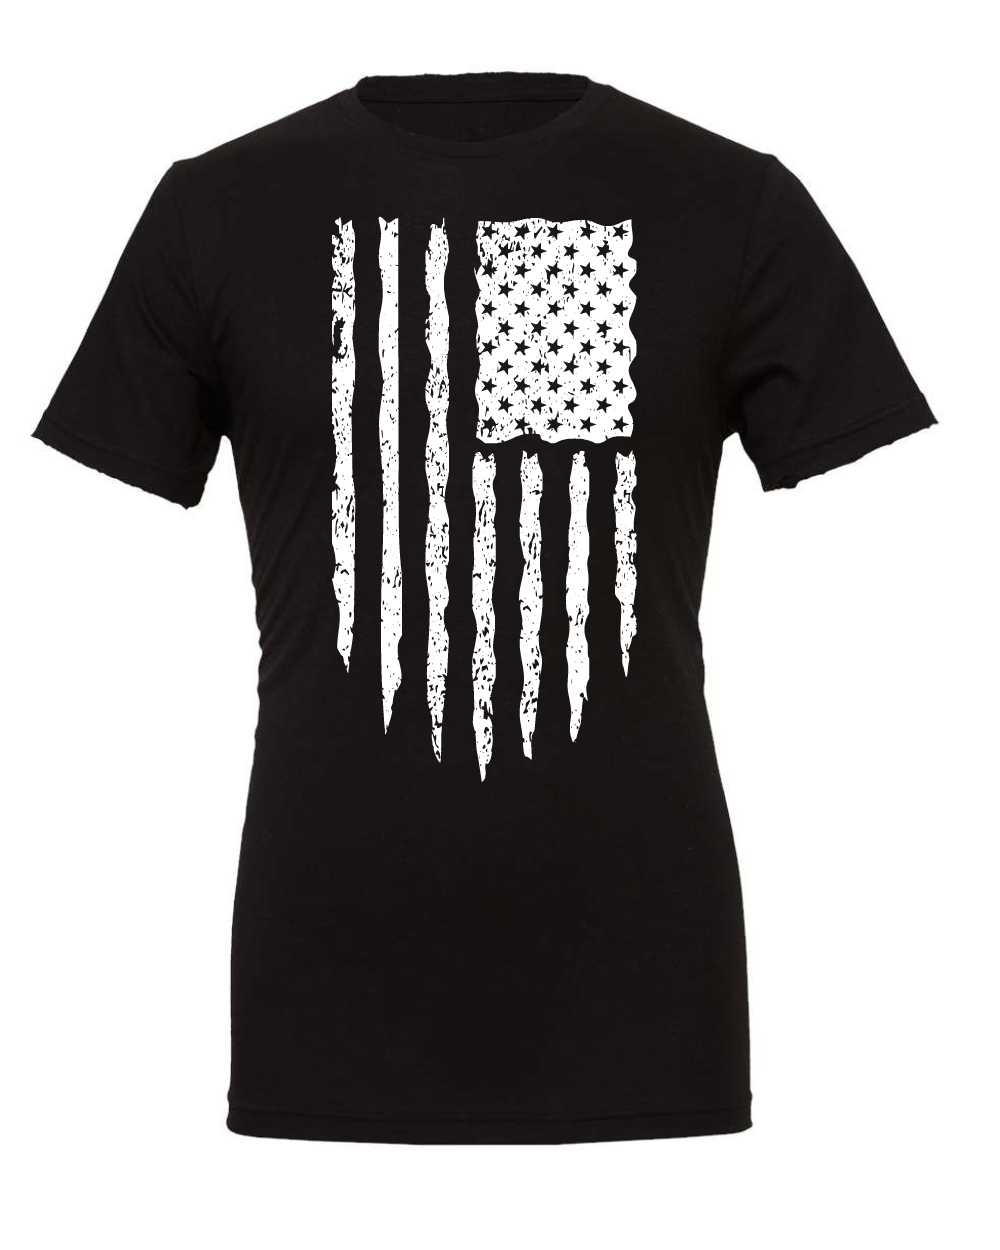 American Flag Men's Shirt